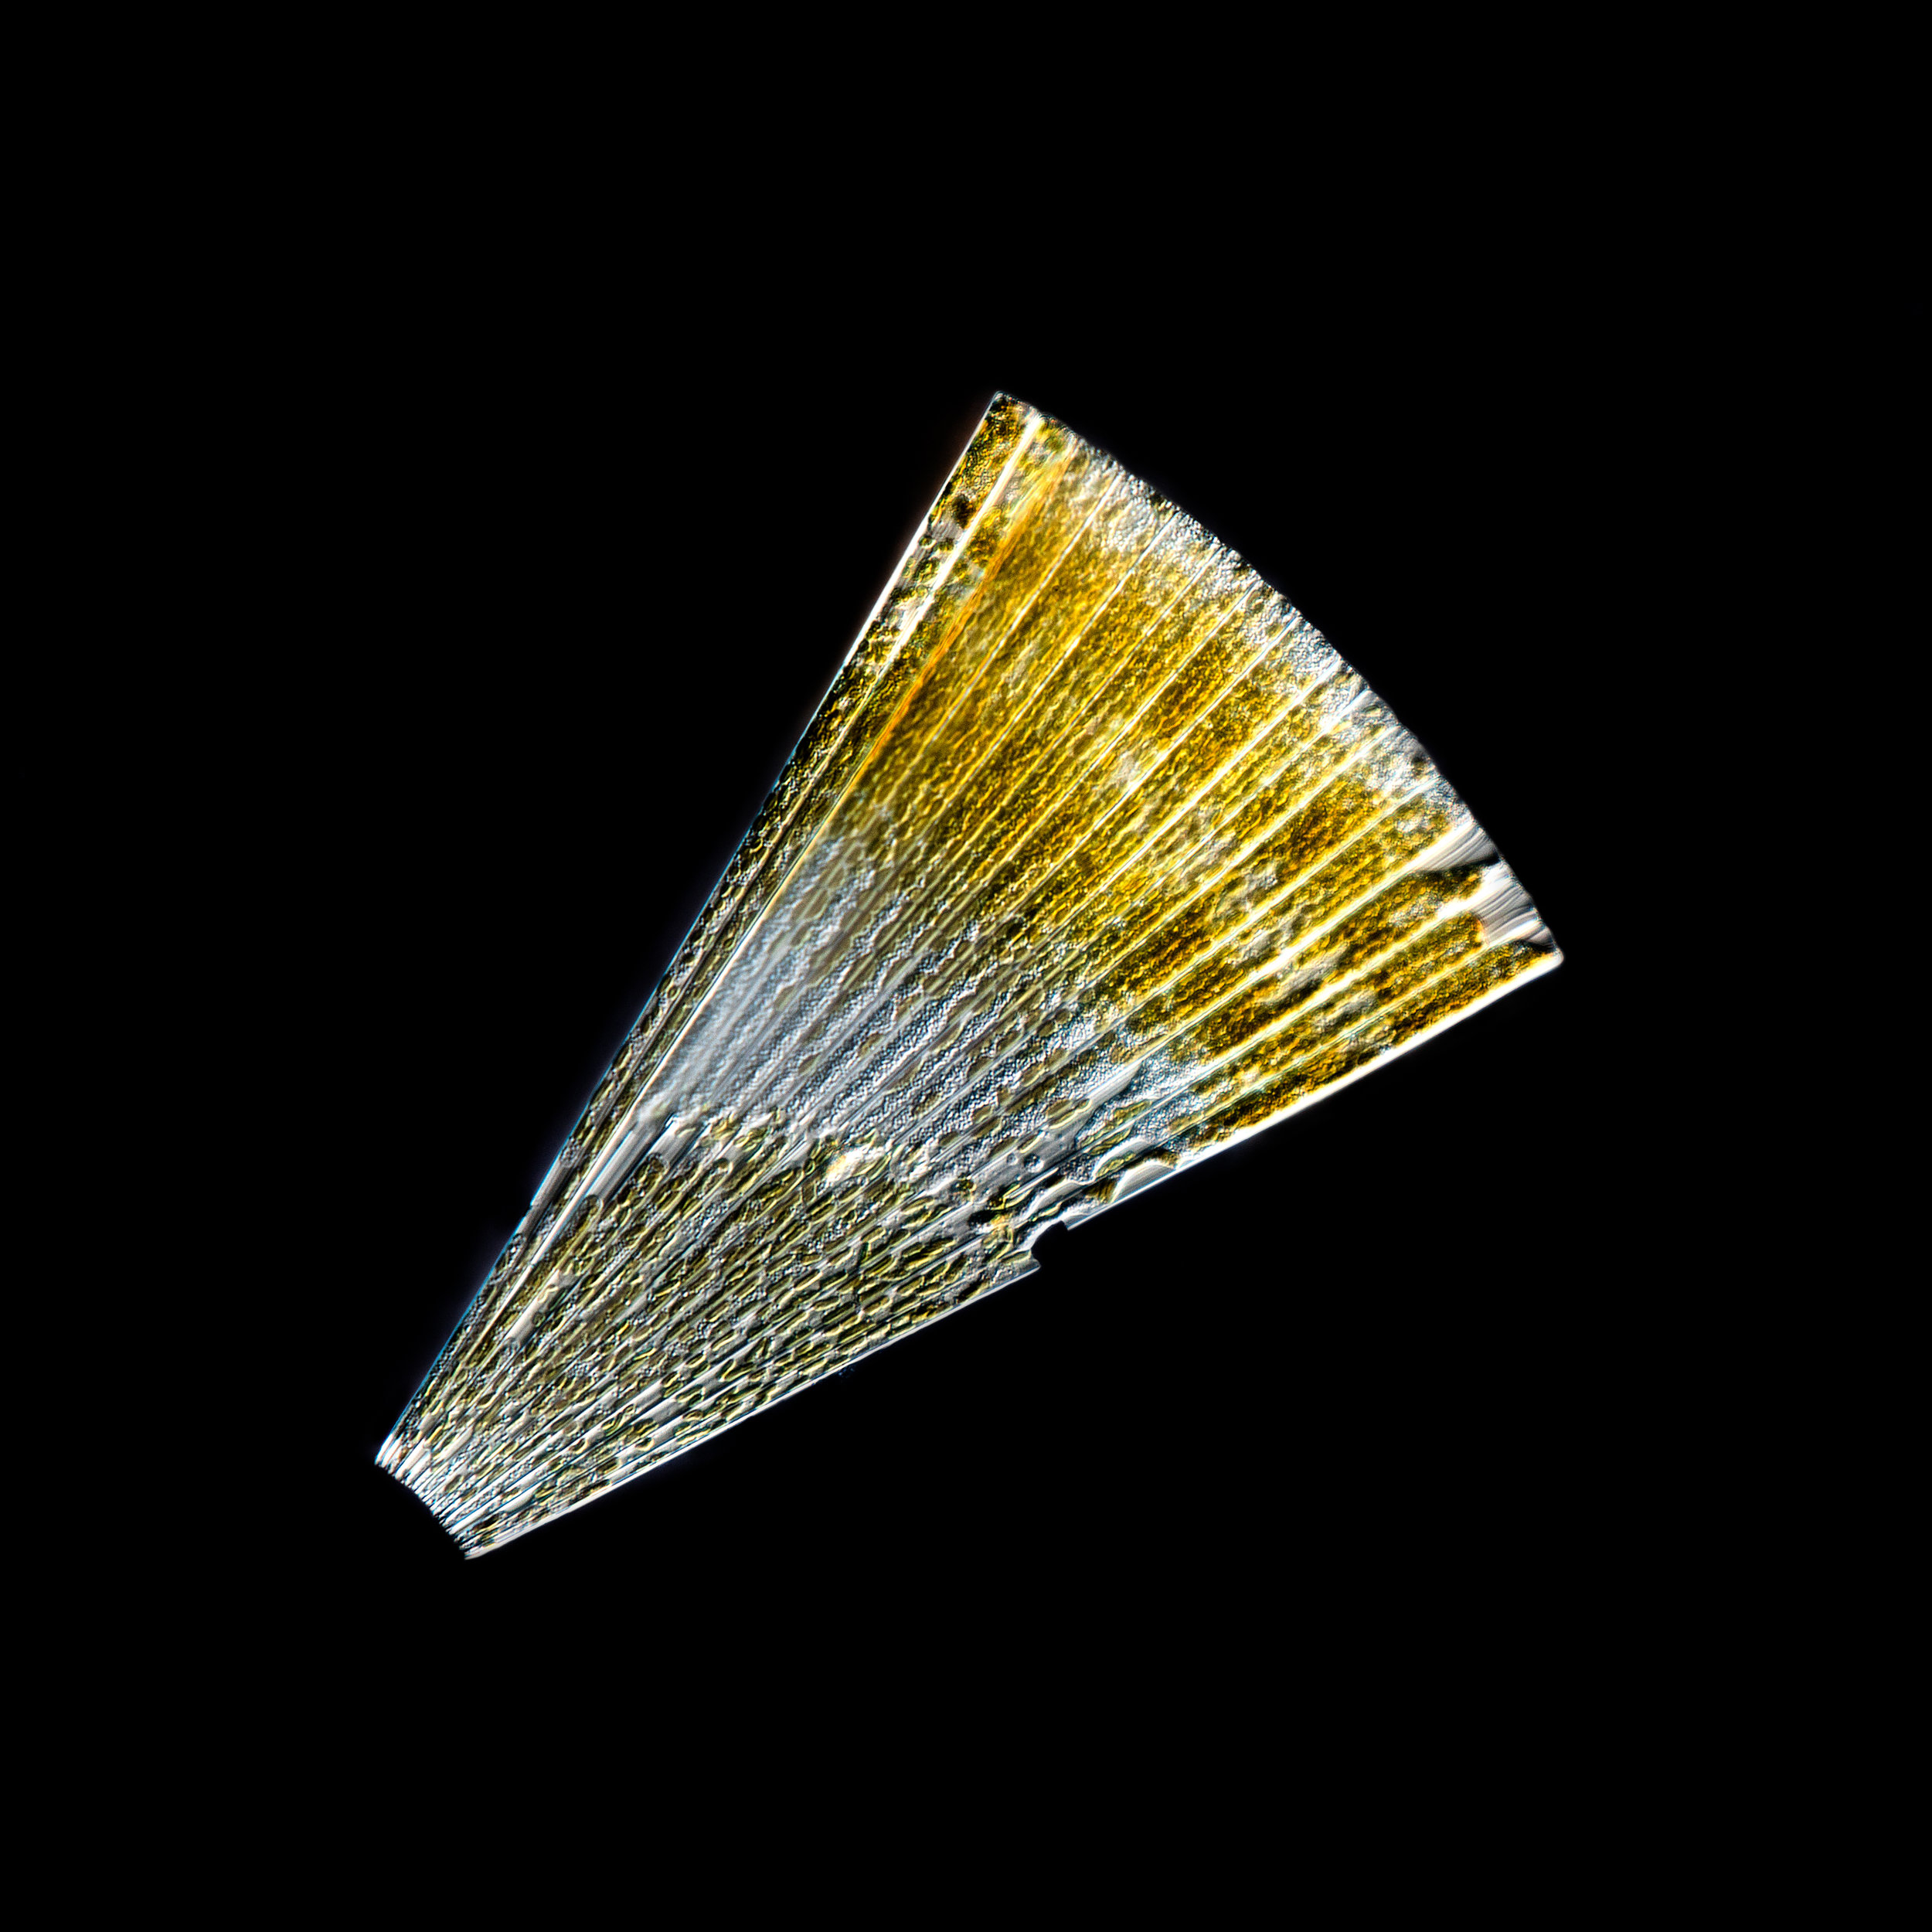  Christian Sardet and The Macronauts   Licmophora &nbsp;diatom.  Bay of Shimoda, Japan. &nbsp; 2015   ©  Christian Sardet and The Macronauts for KYOTOGRAPHIE / Plankton Chronicles Project 